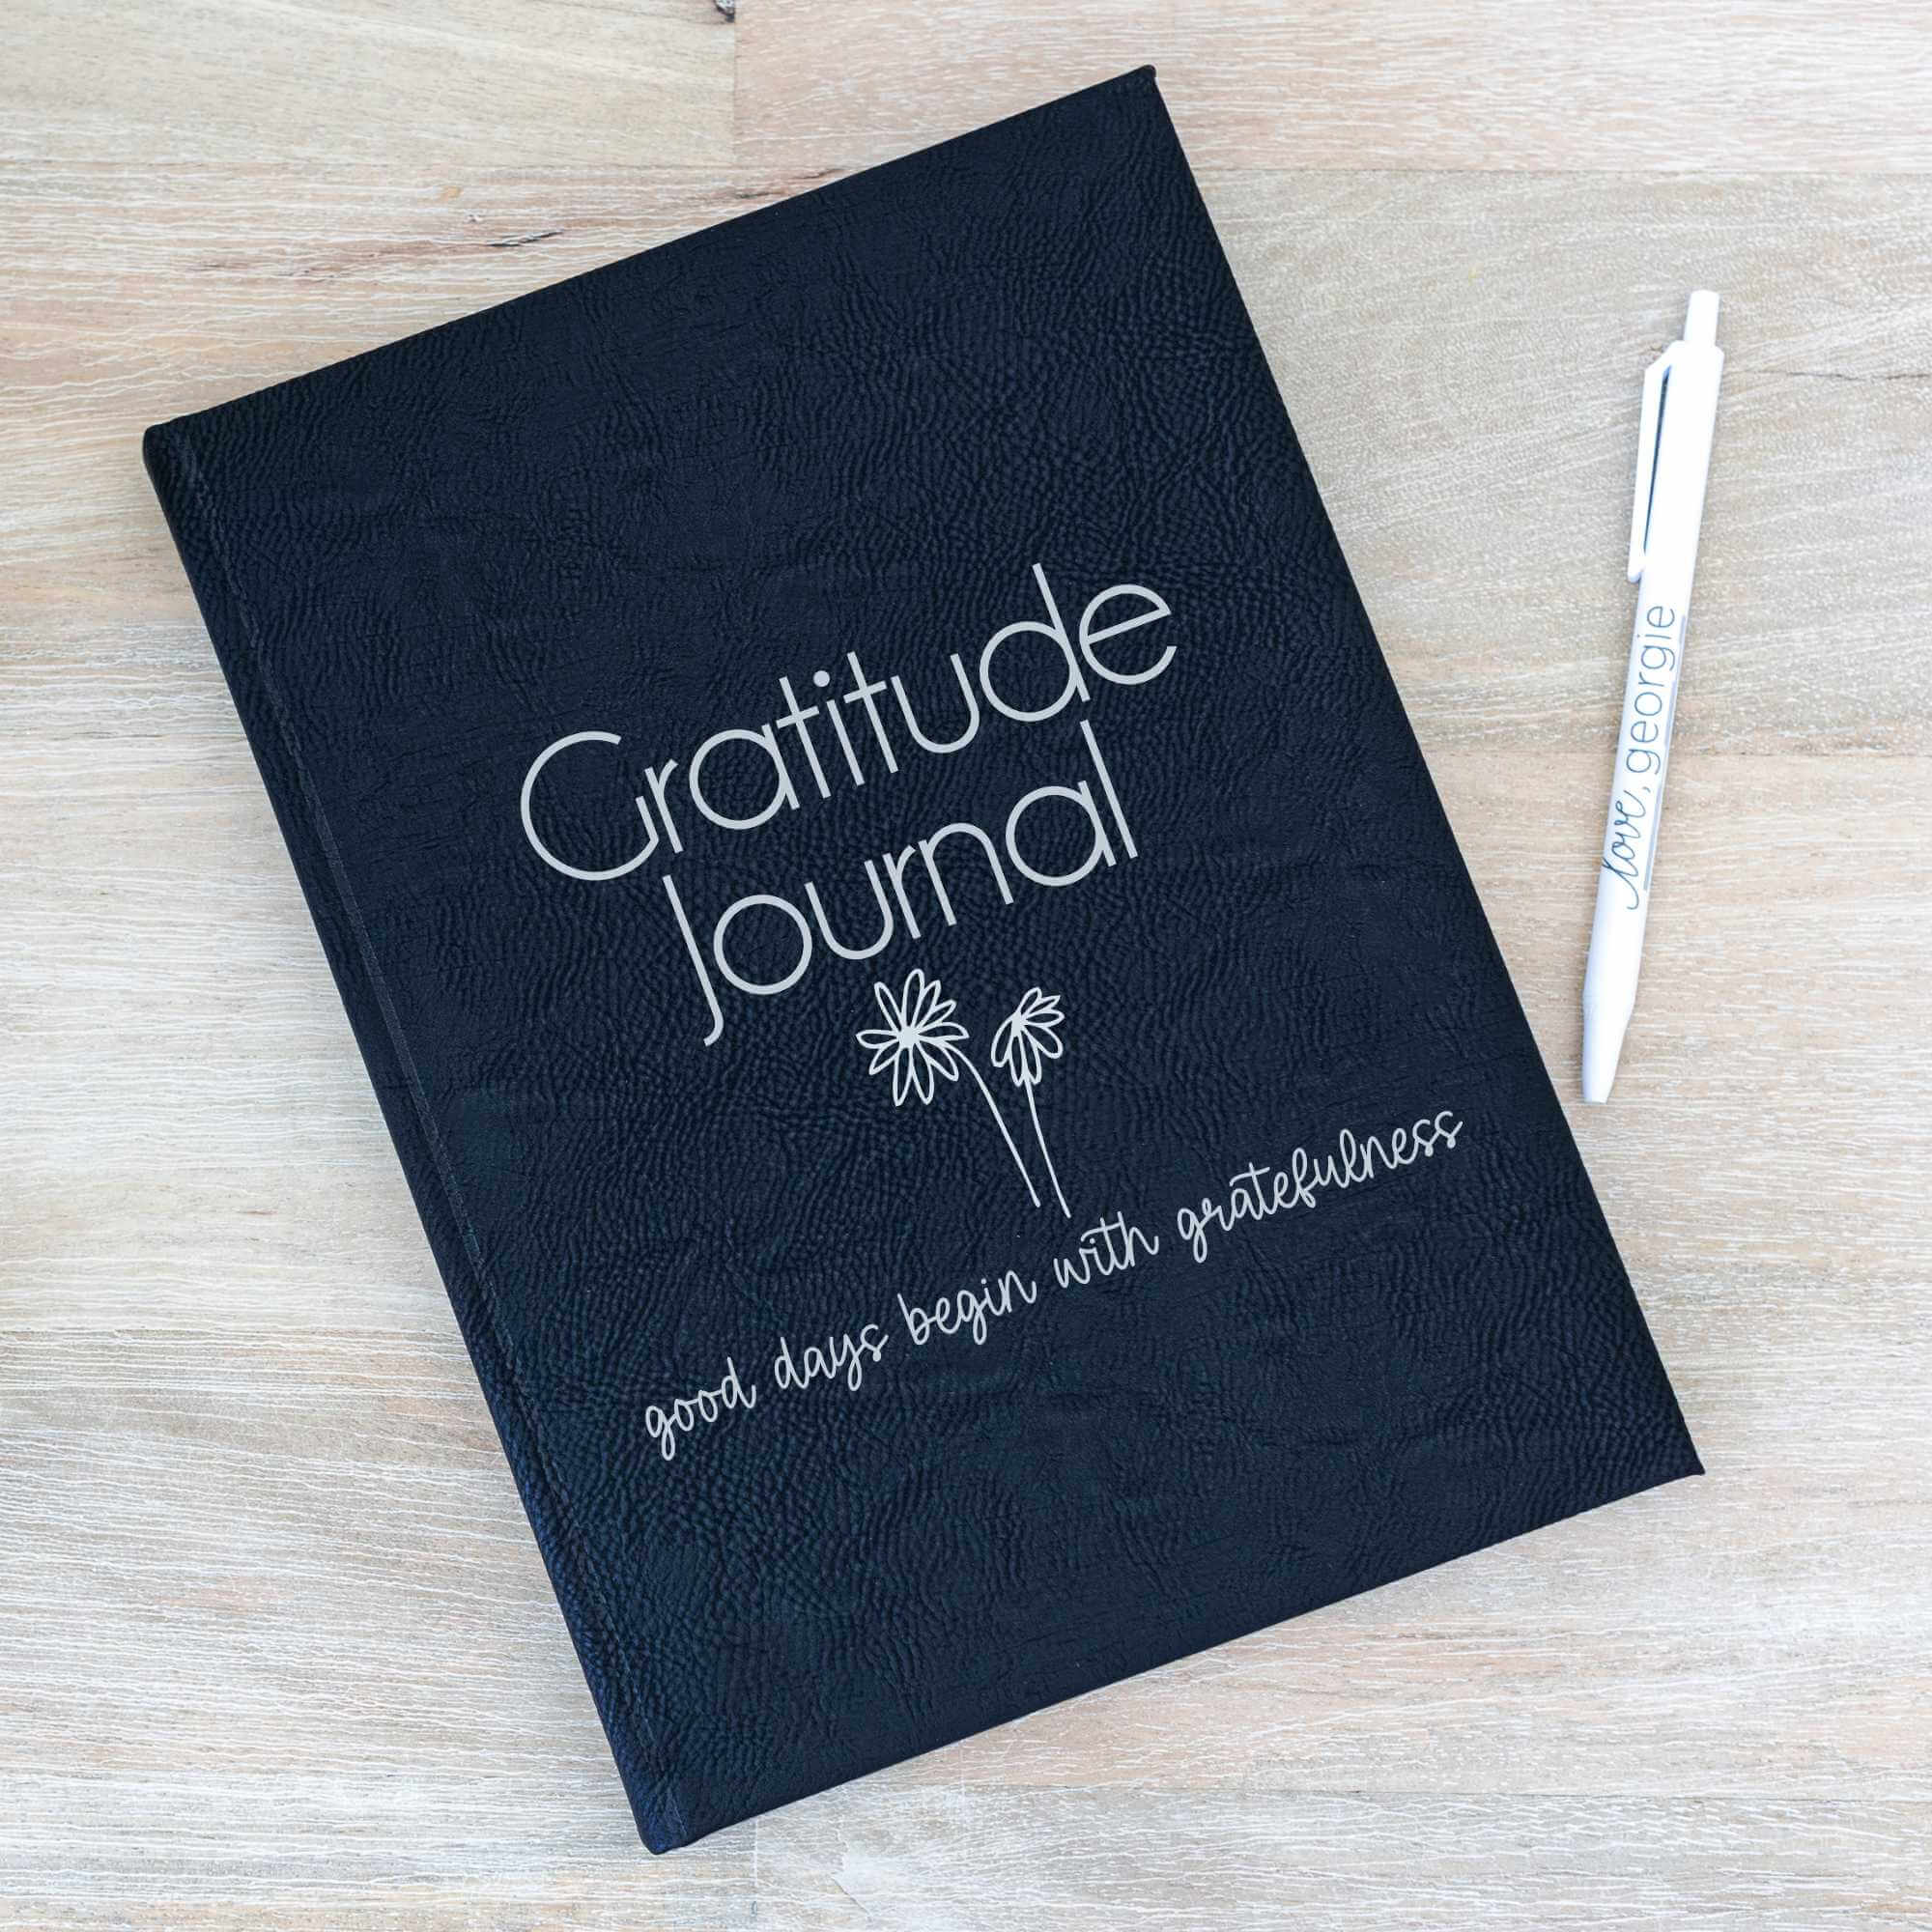 Gratitude Journal in Vegan Leather Cover